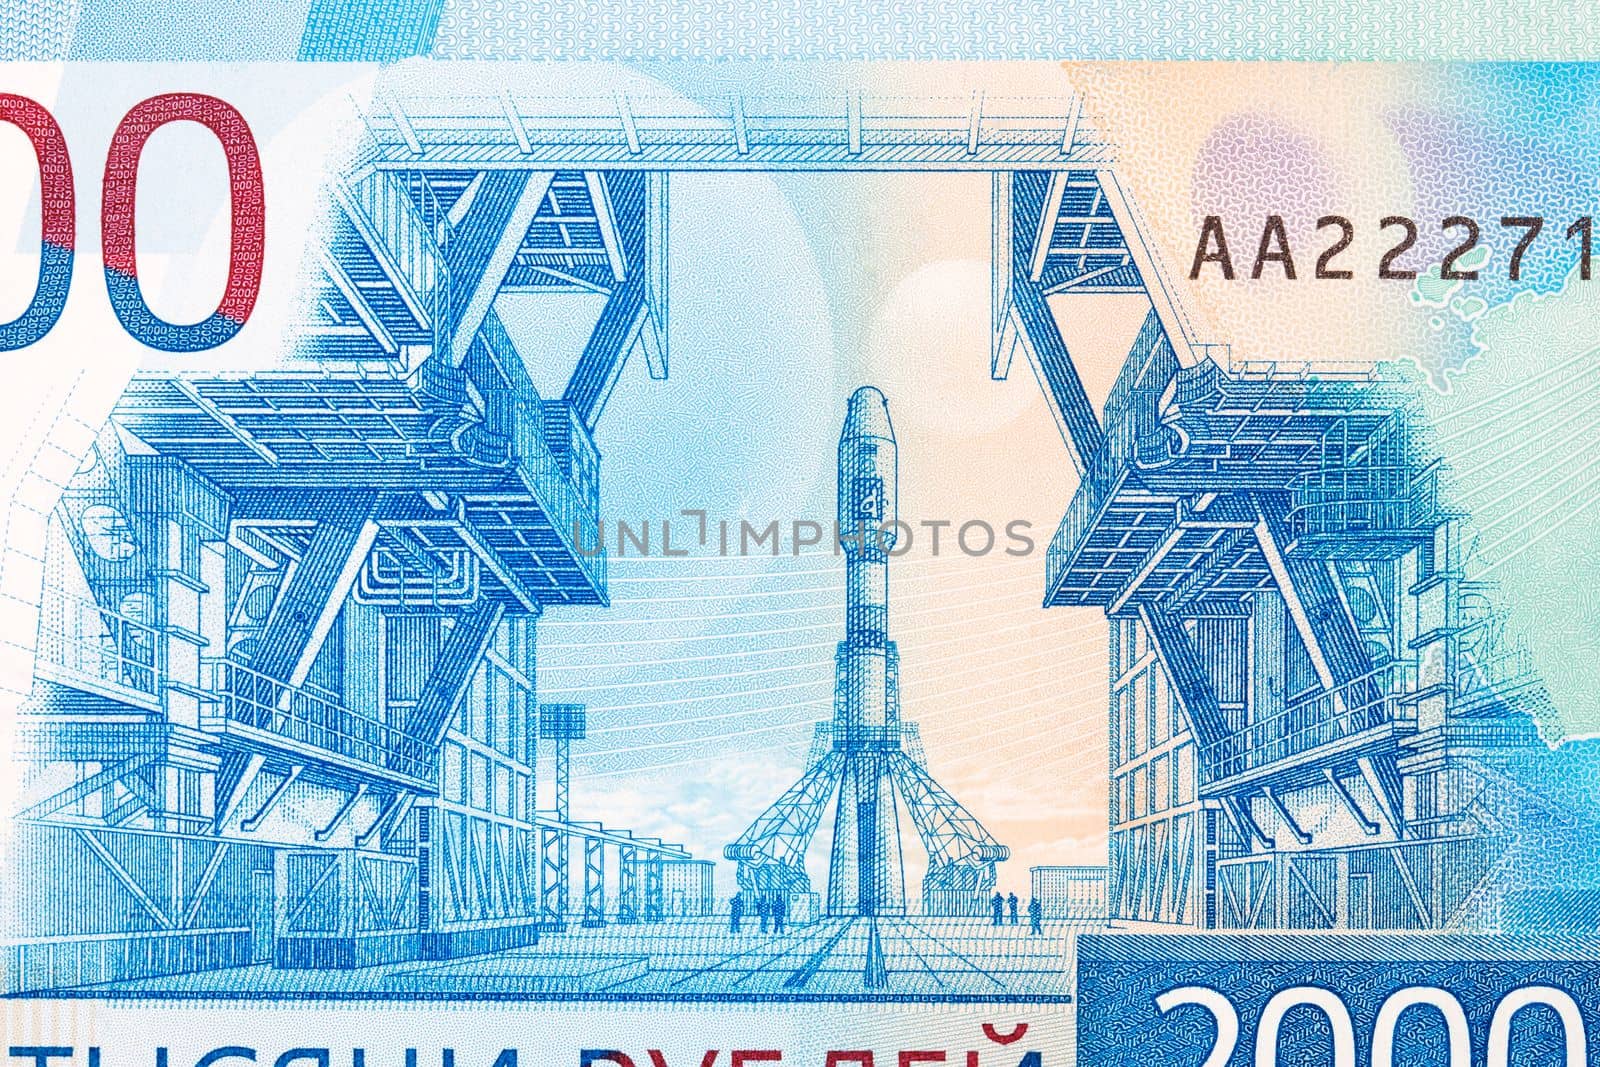 Vostochny Cosmodrome, Amur Region from Russian money